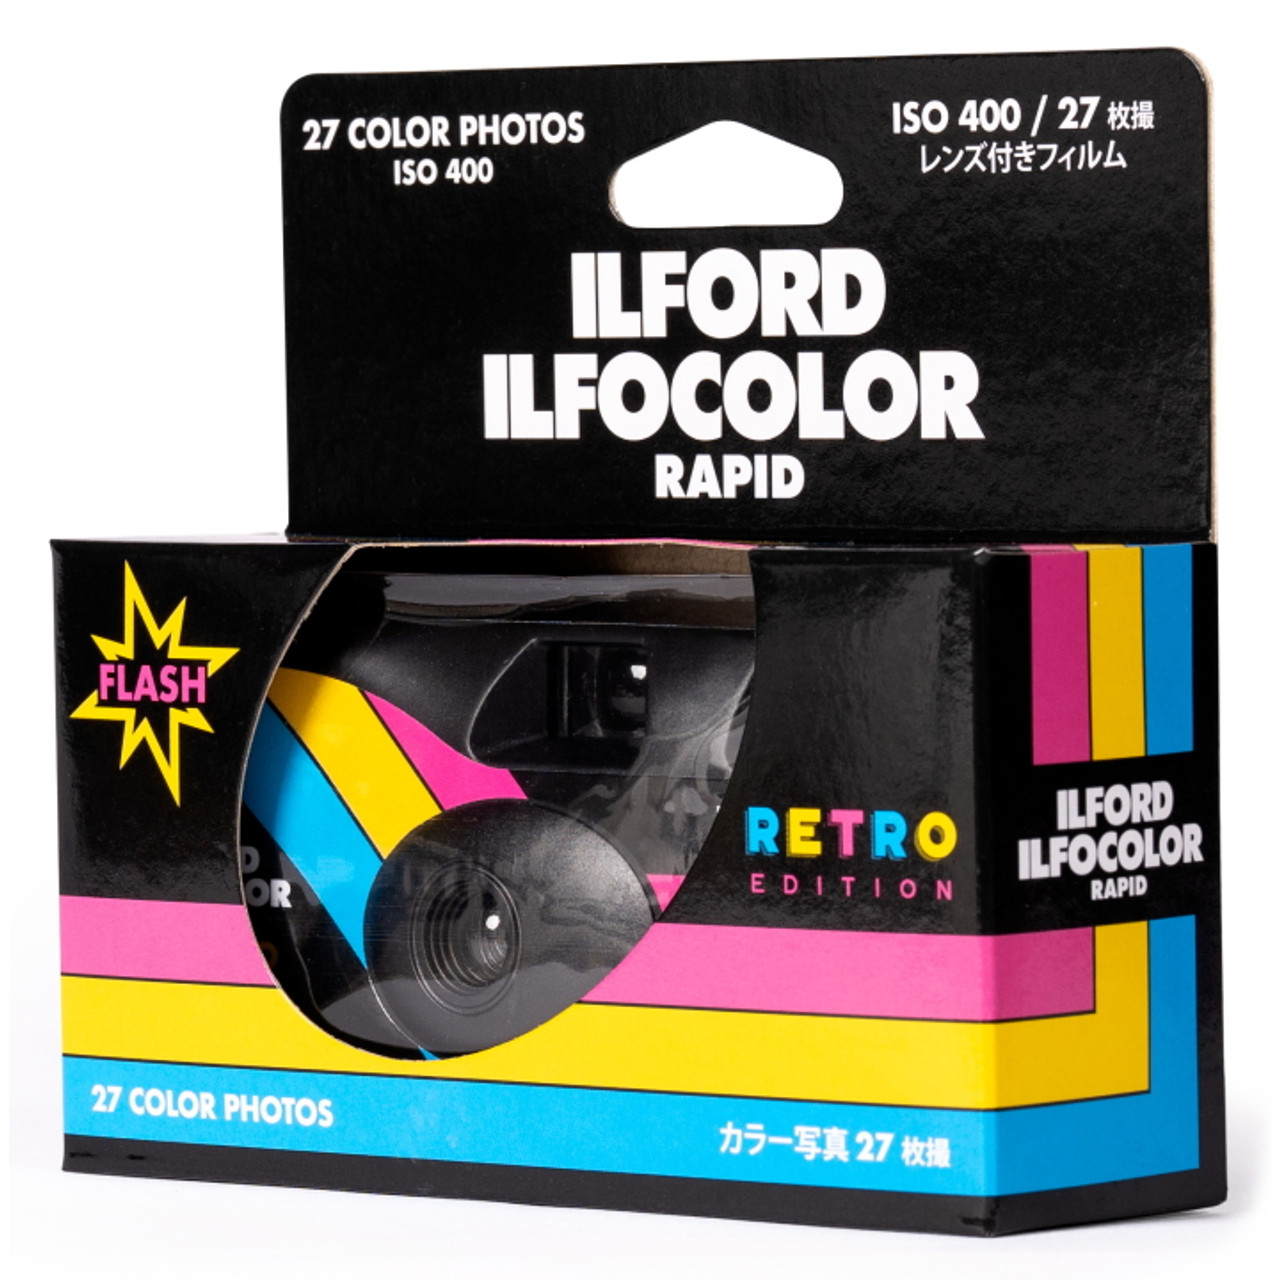 Appareil photo jetable ILFORD Ilfocolor, 27 exp, 400 ISO - Retro Edition